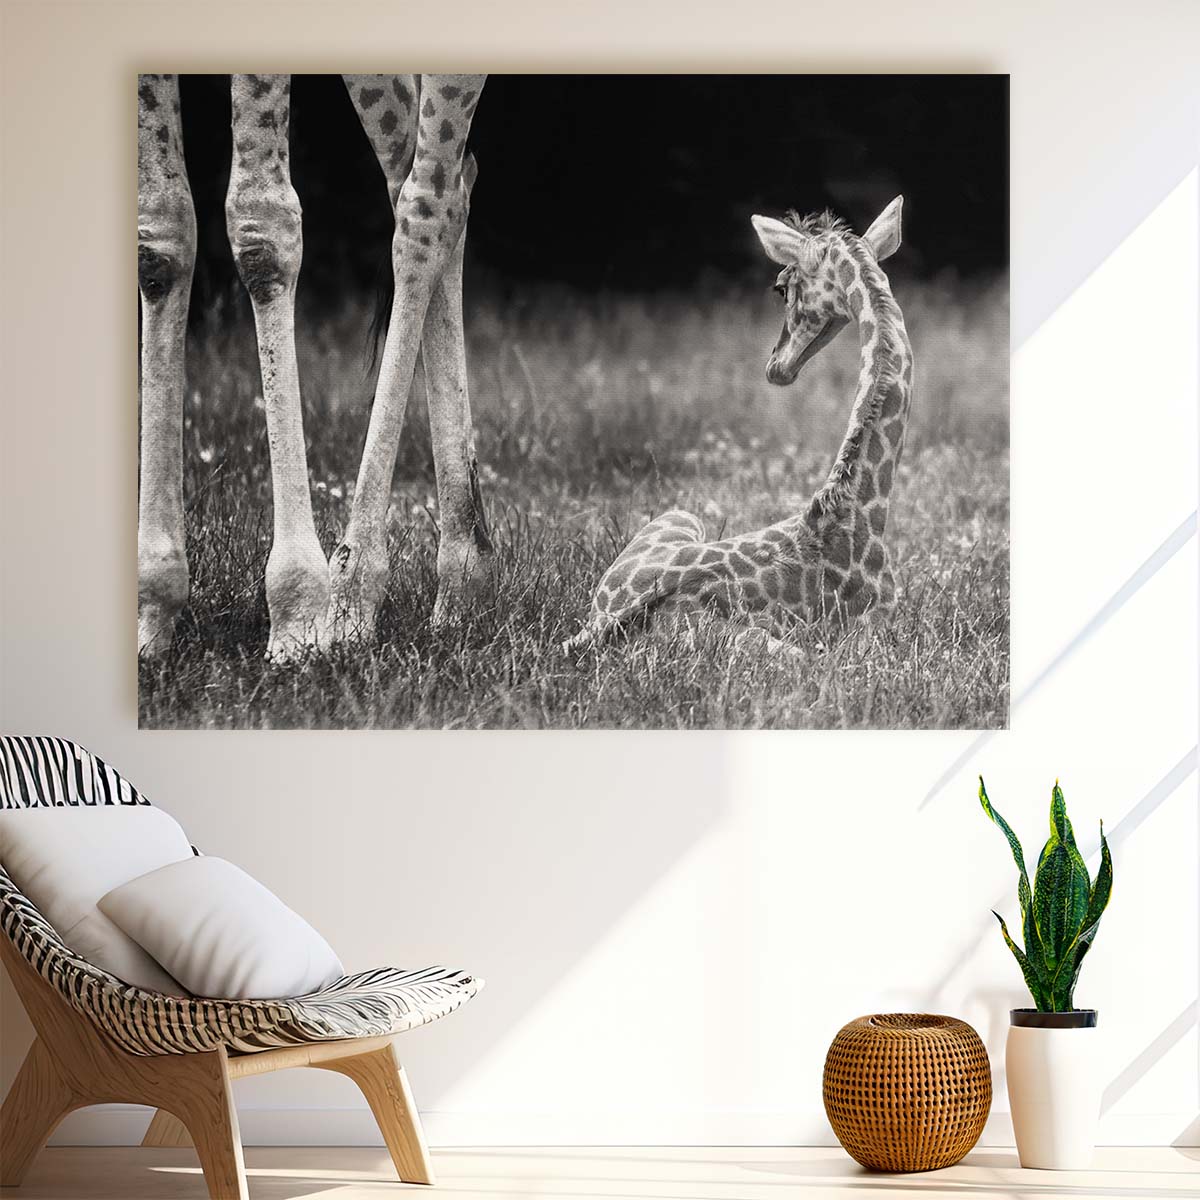 Charming Baby Giraffe Monochrome Nature Wall Art